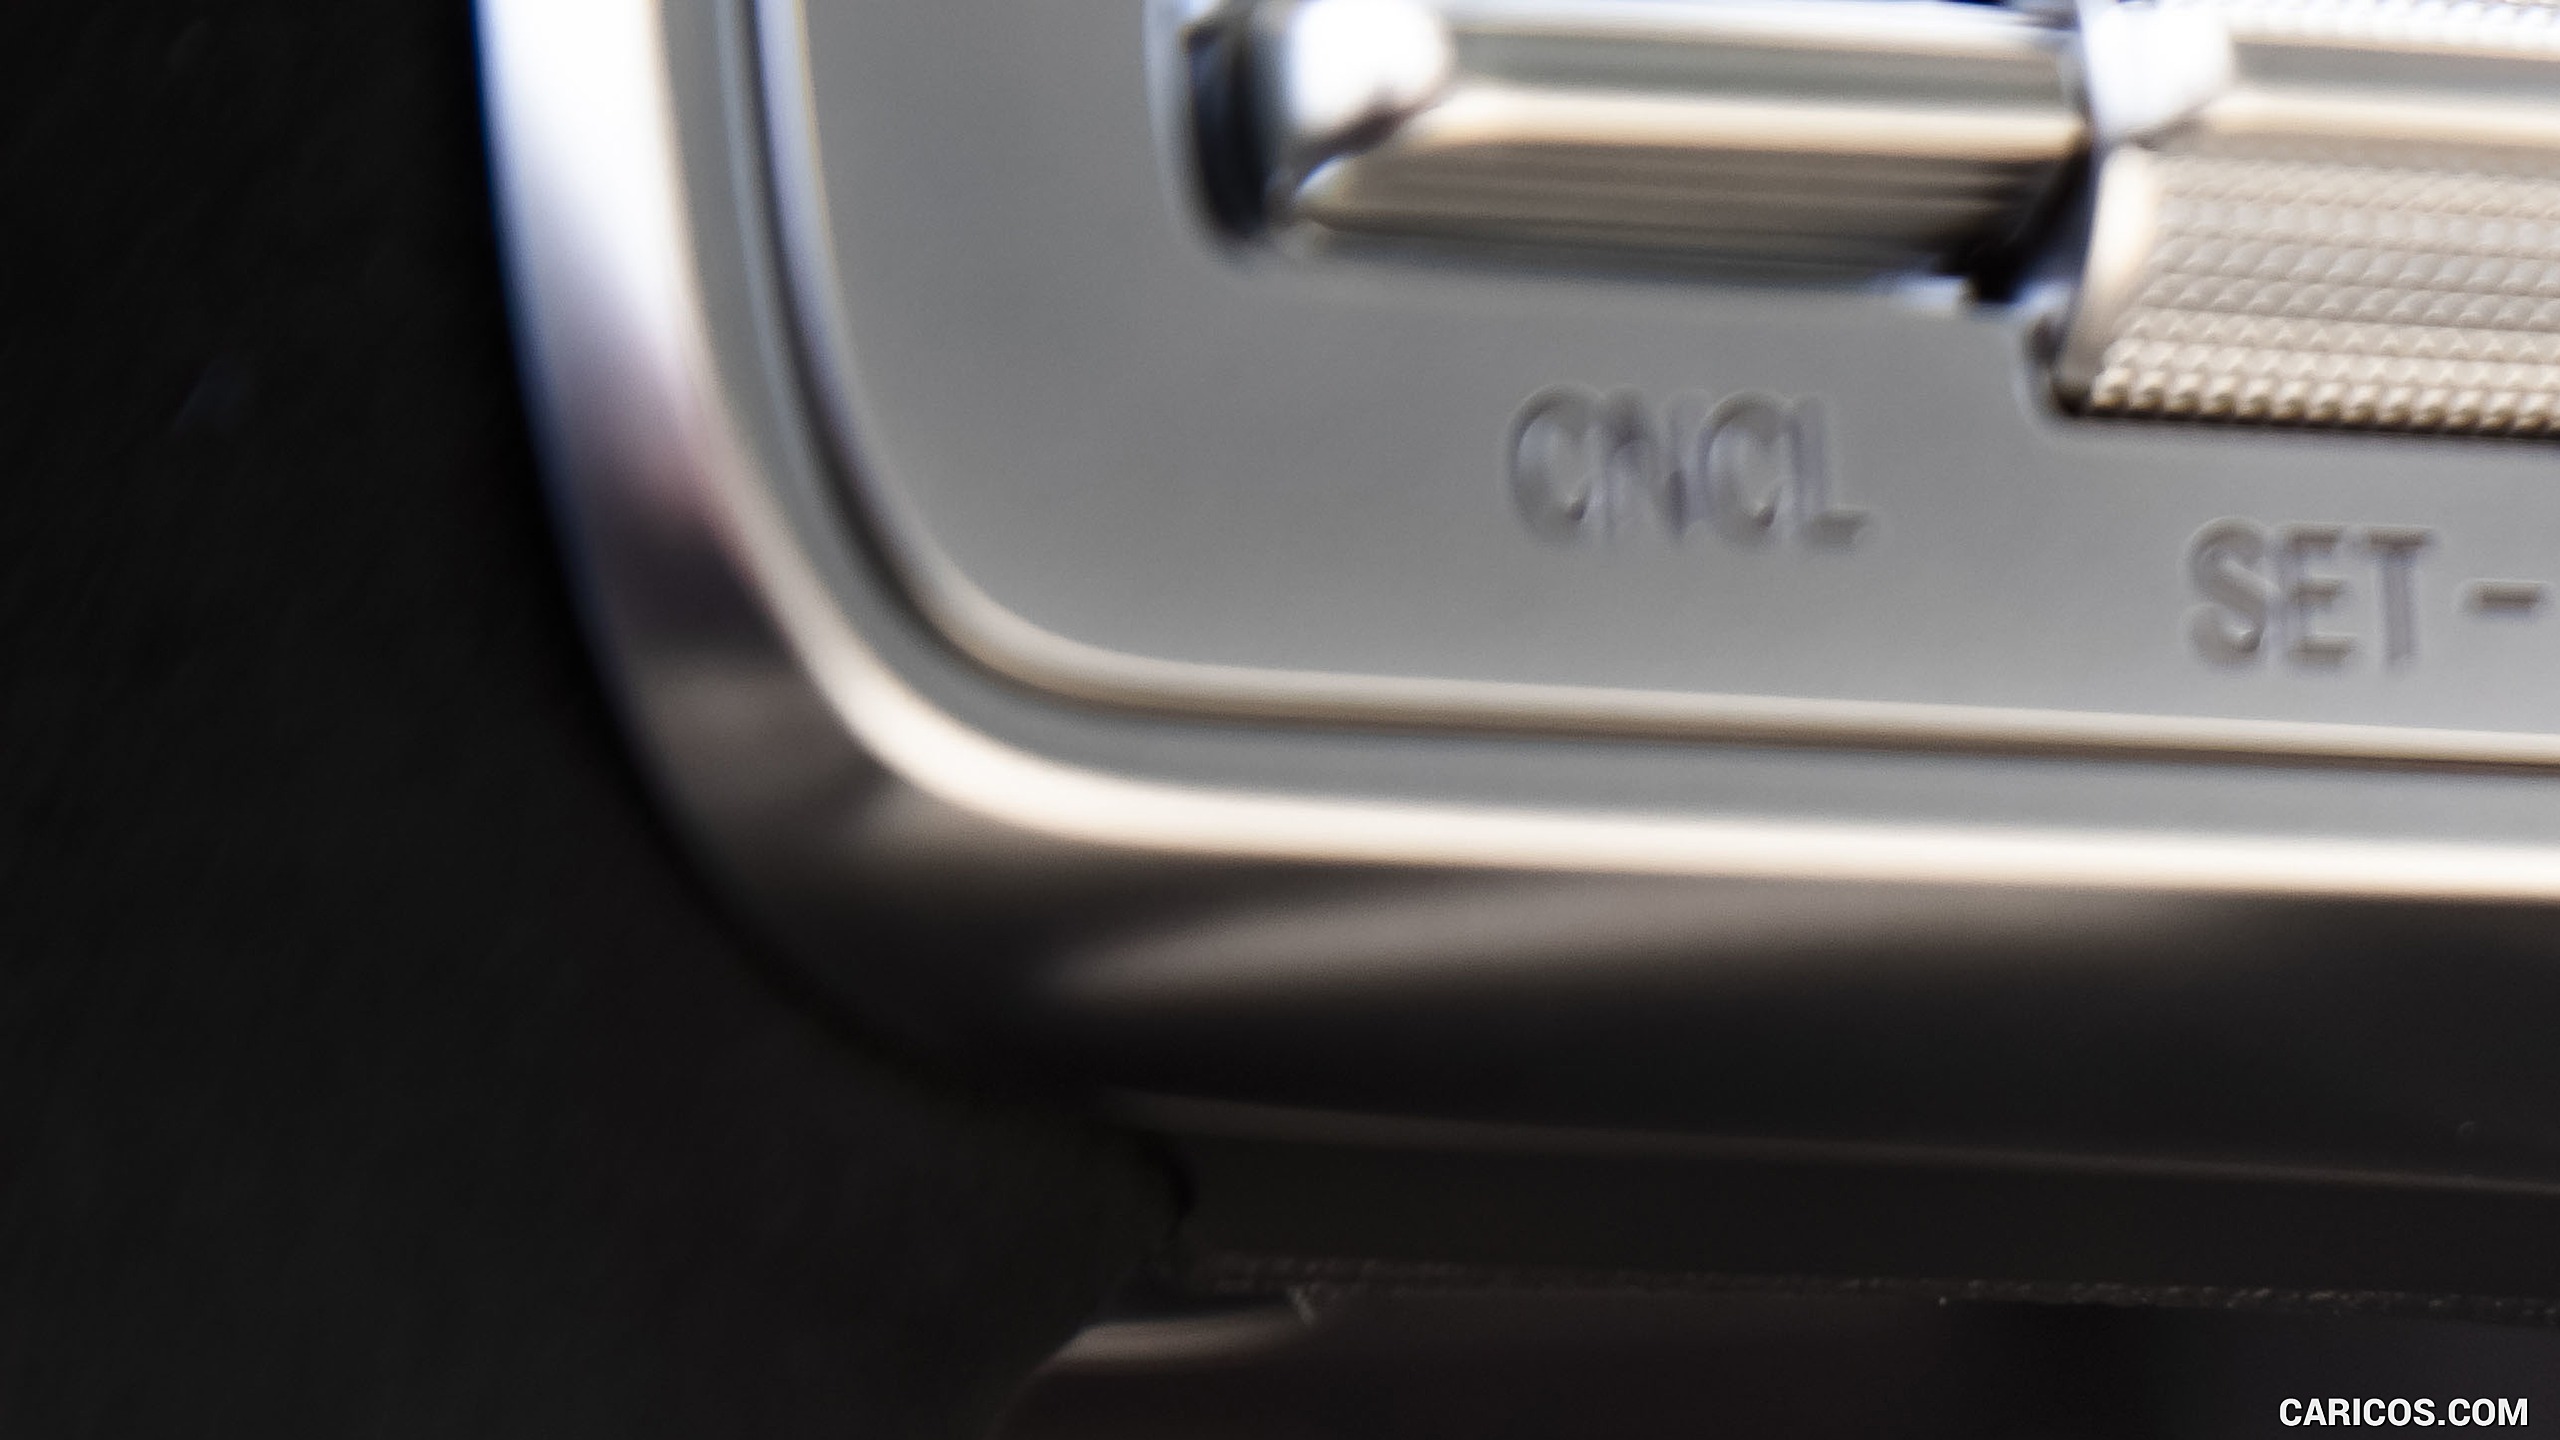 2021 Mercedes-AMG GLE 63 S (US-Spec) - Interior, Steering Wheel, #81 of 187